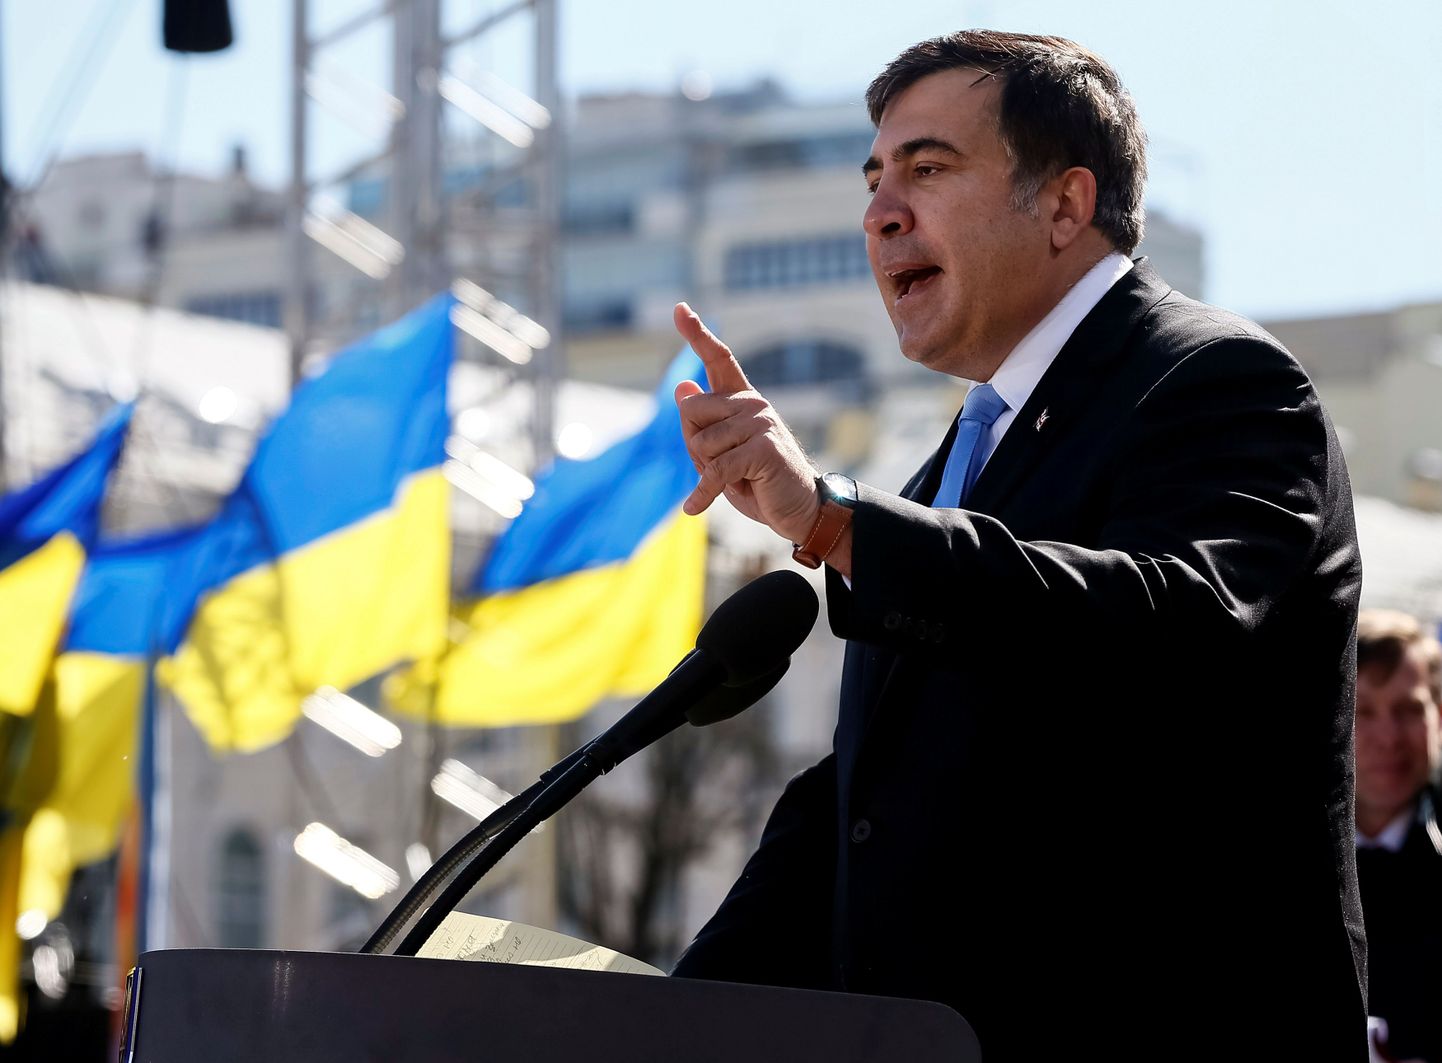 Gruusia ekspresident ja endine Ukraina Odessa oblasti kuberner Mihheil Saakašvili